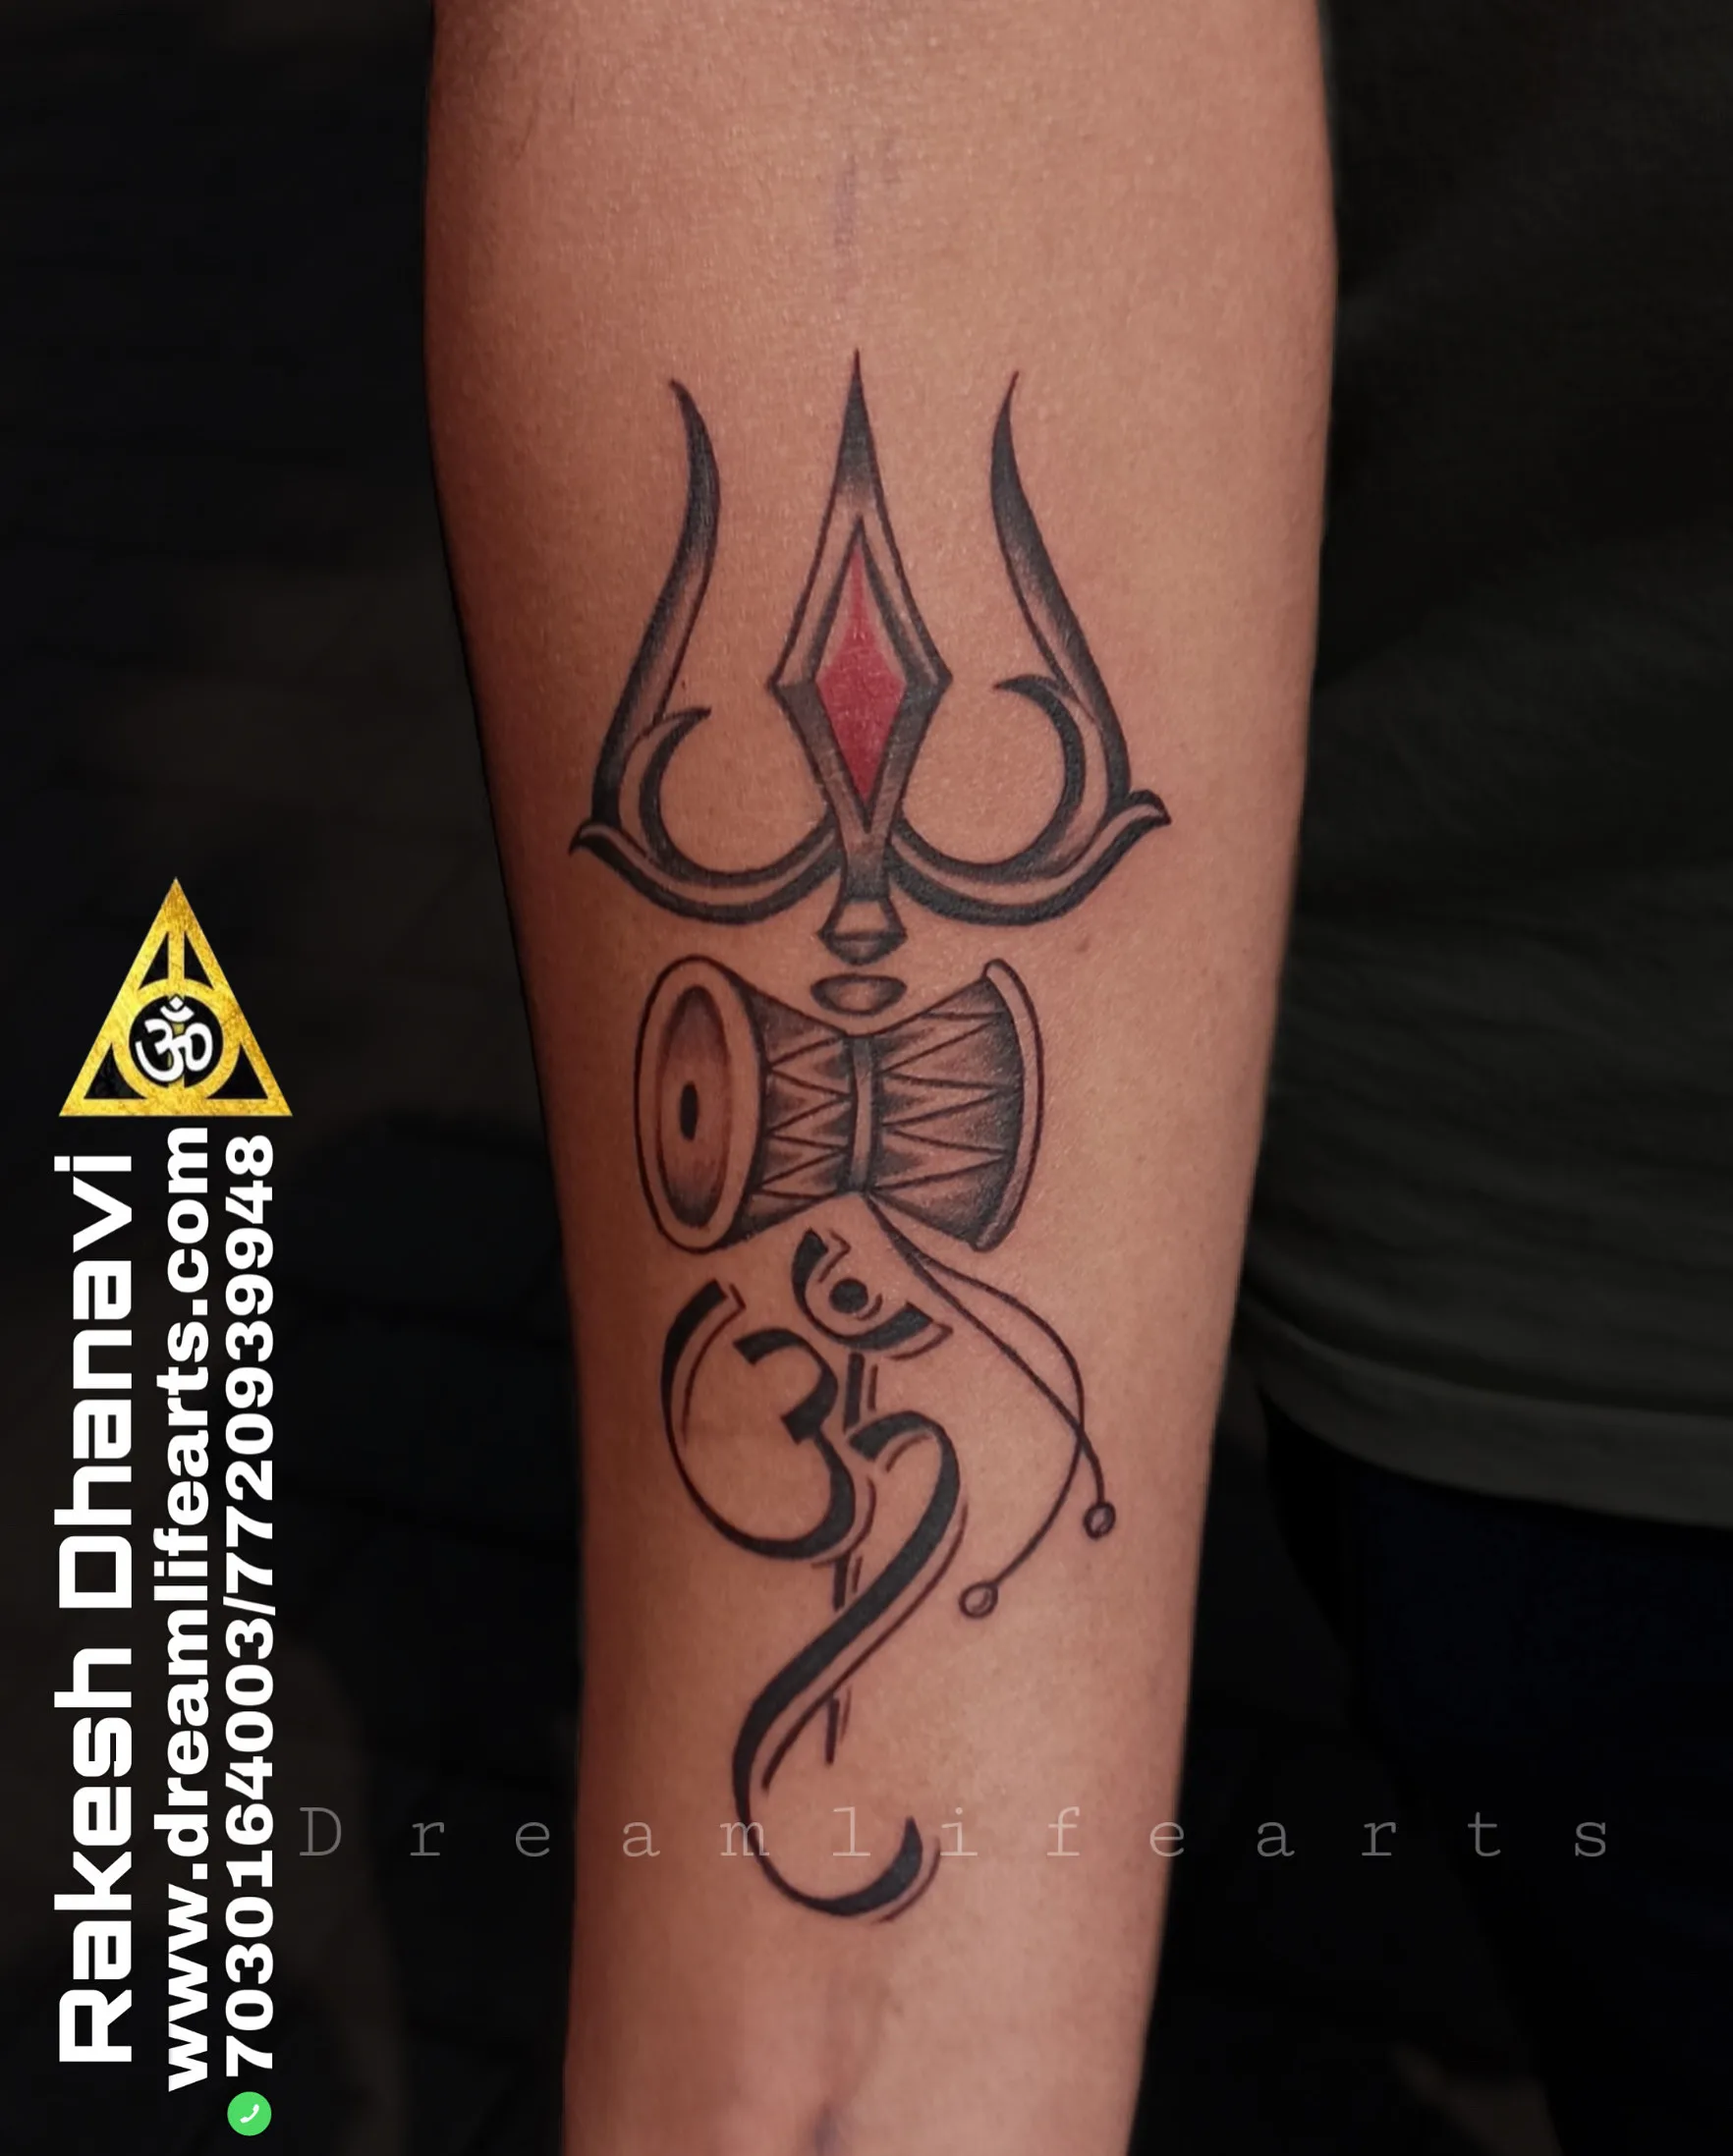 Trasul tattoo rudraaksh tattoo damru tattoo | Hand tattoos for guys, Arm  band tattoo for women, Small tattoos for guys